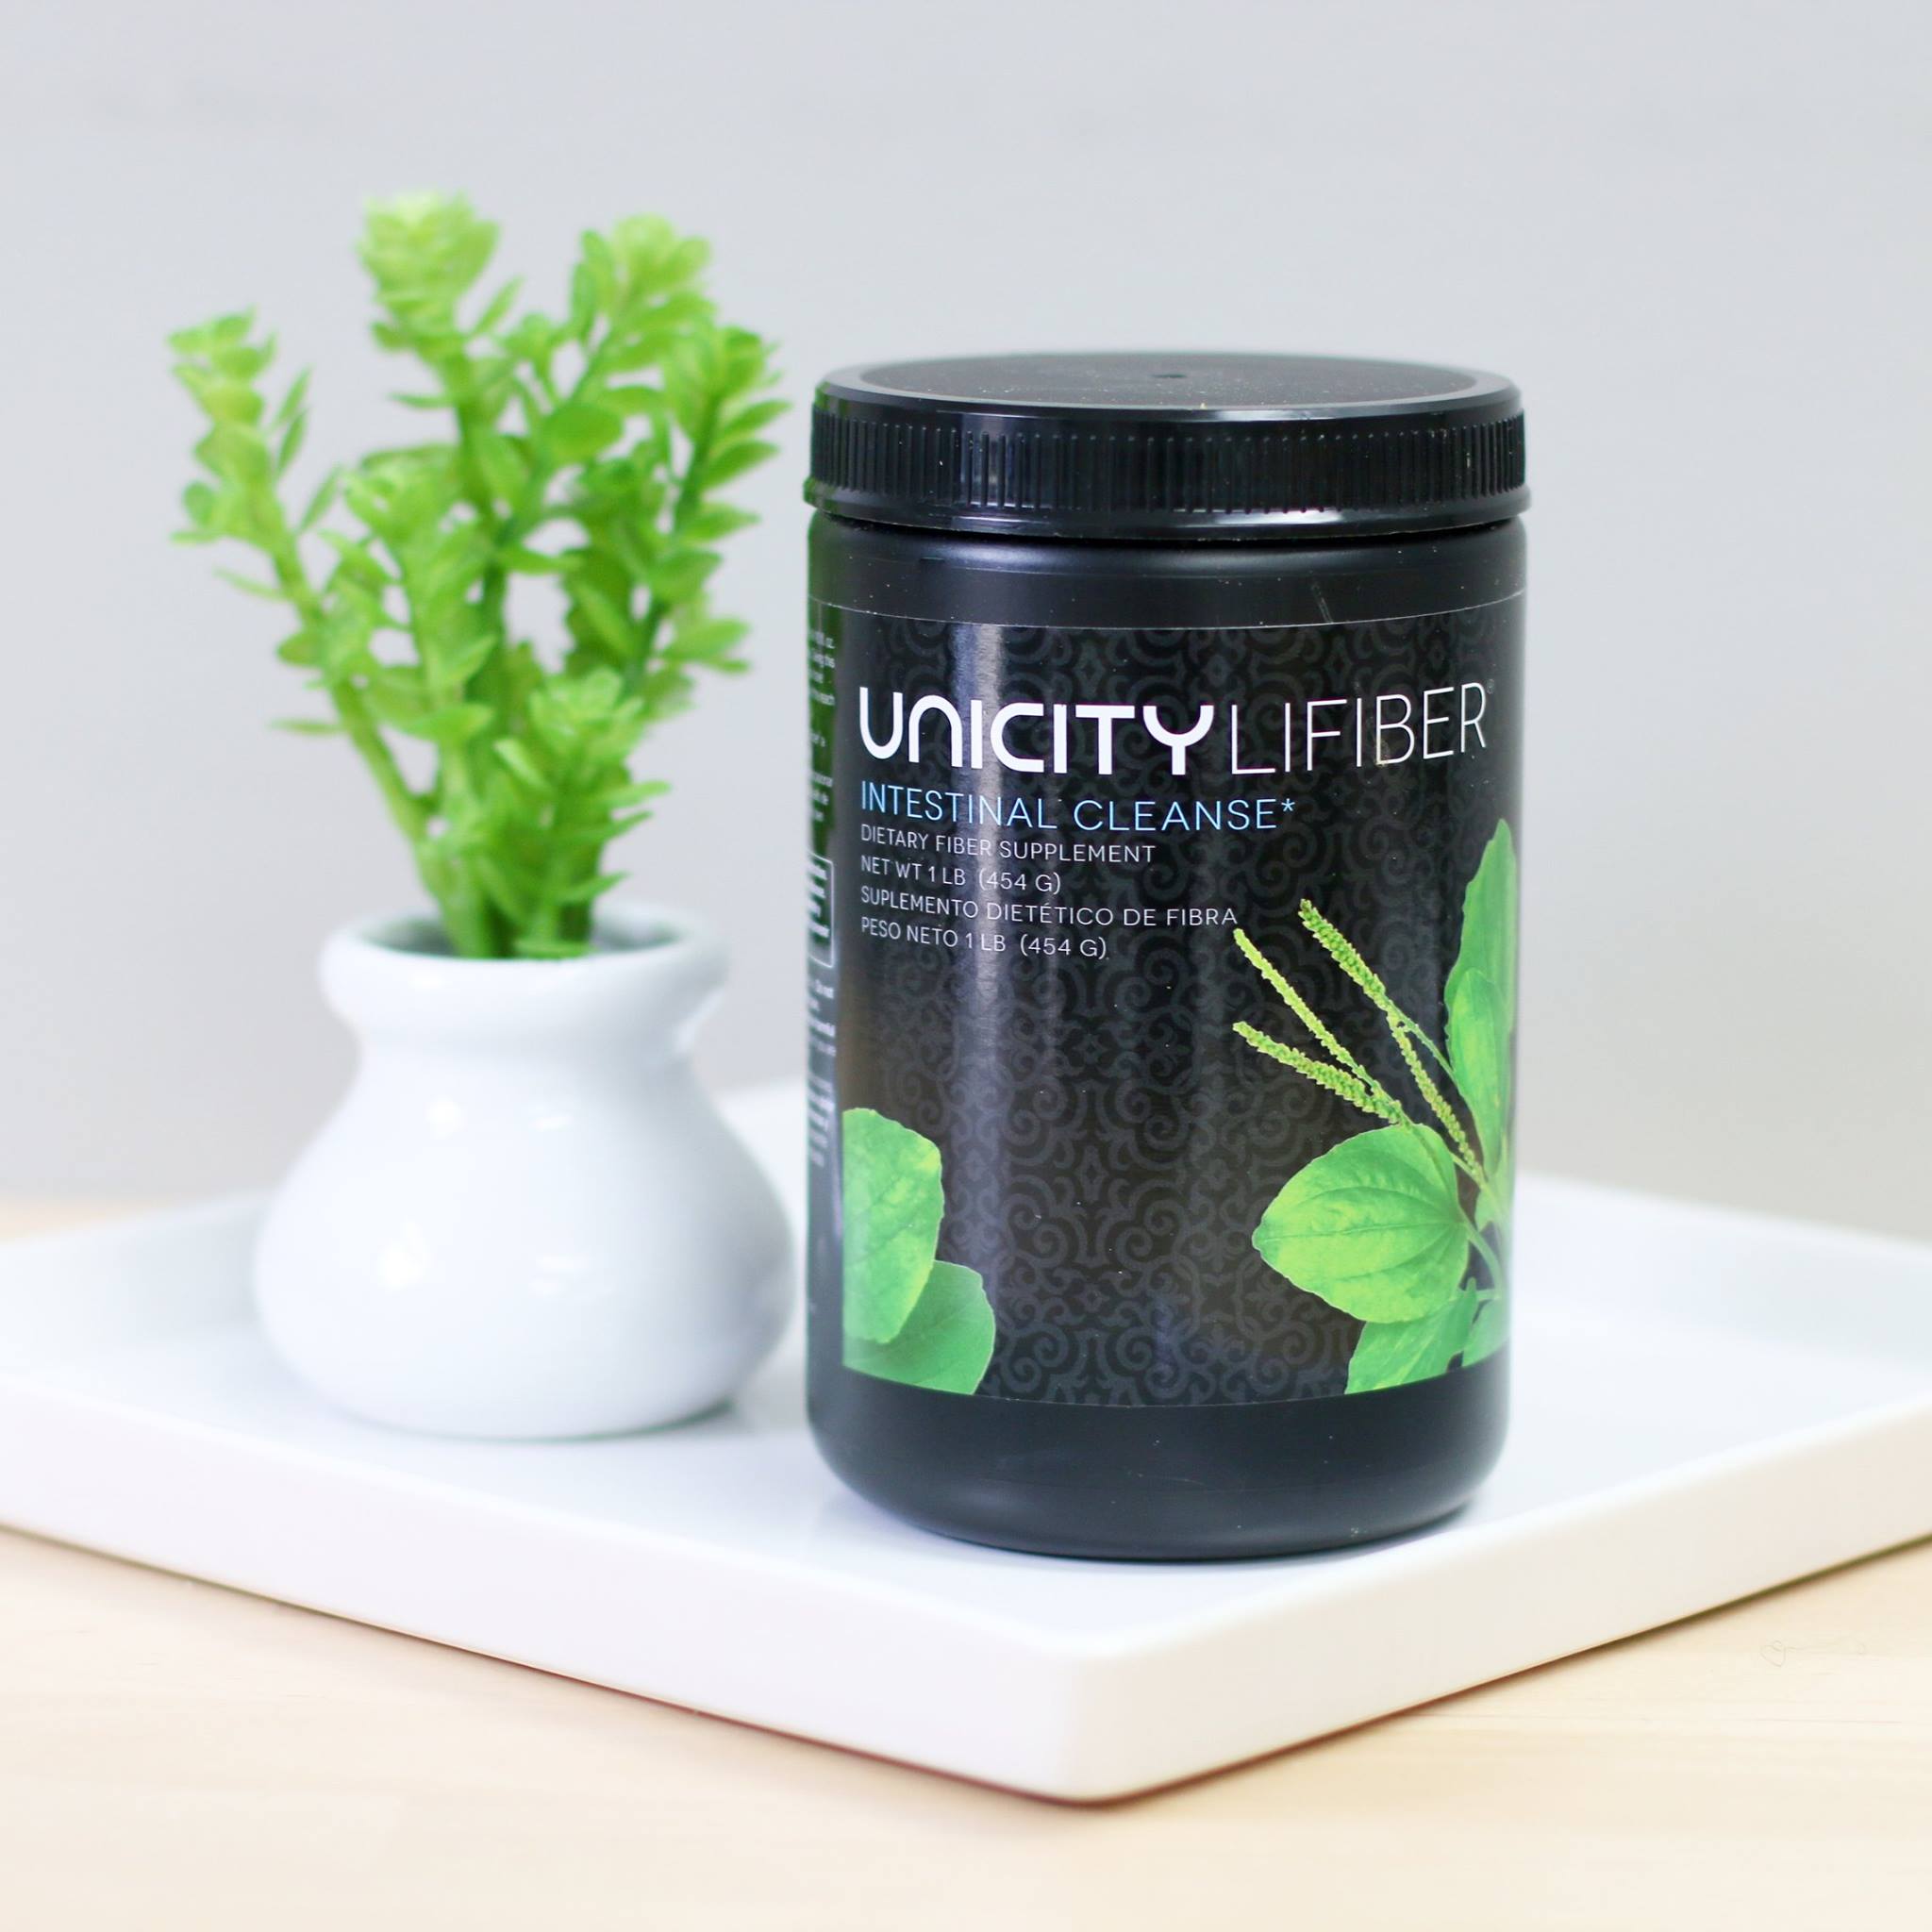 Unicity Lifiber